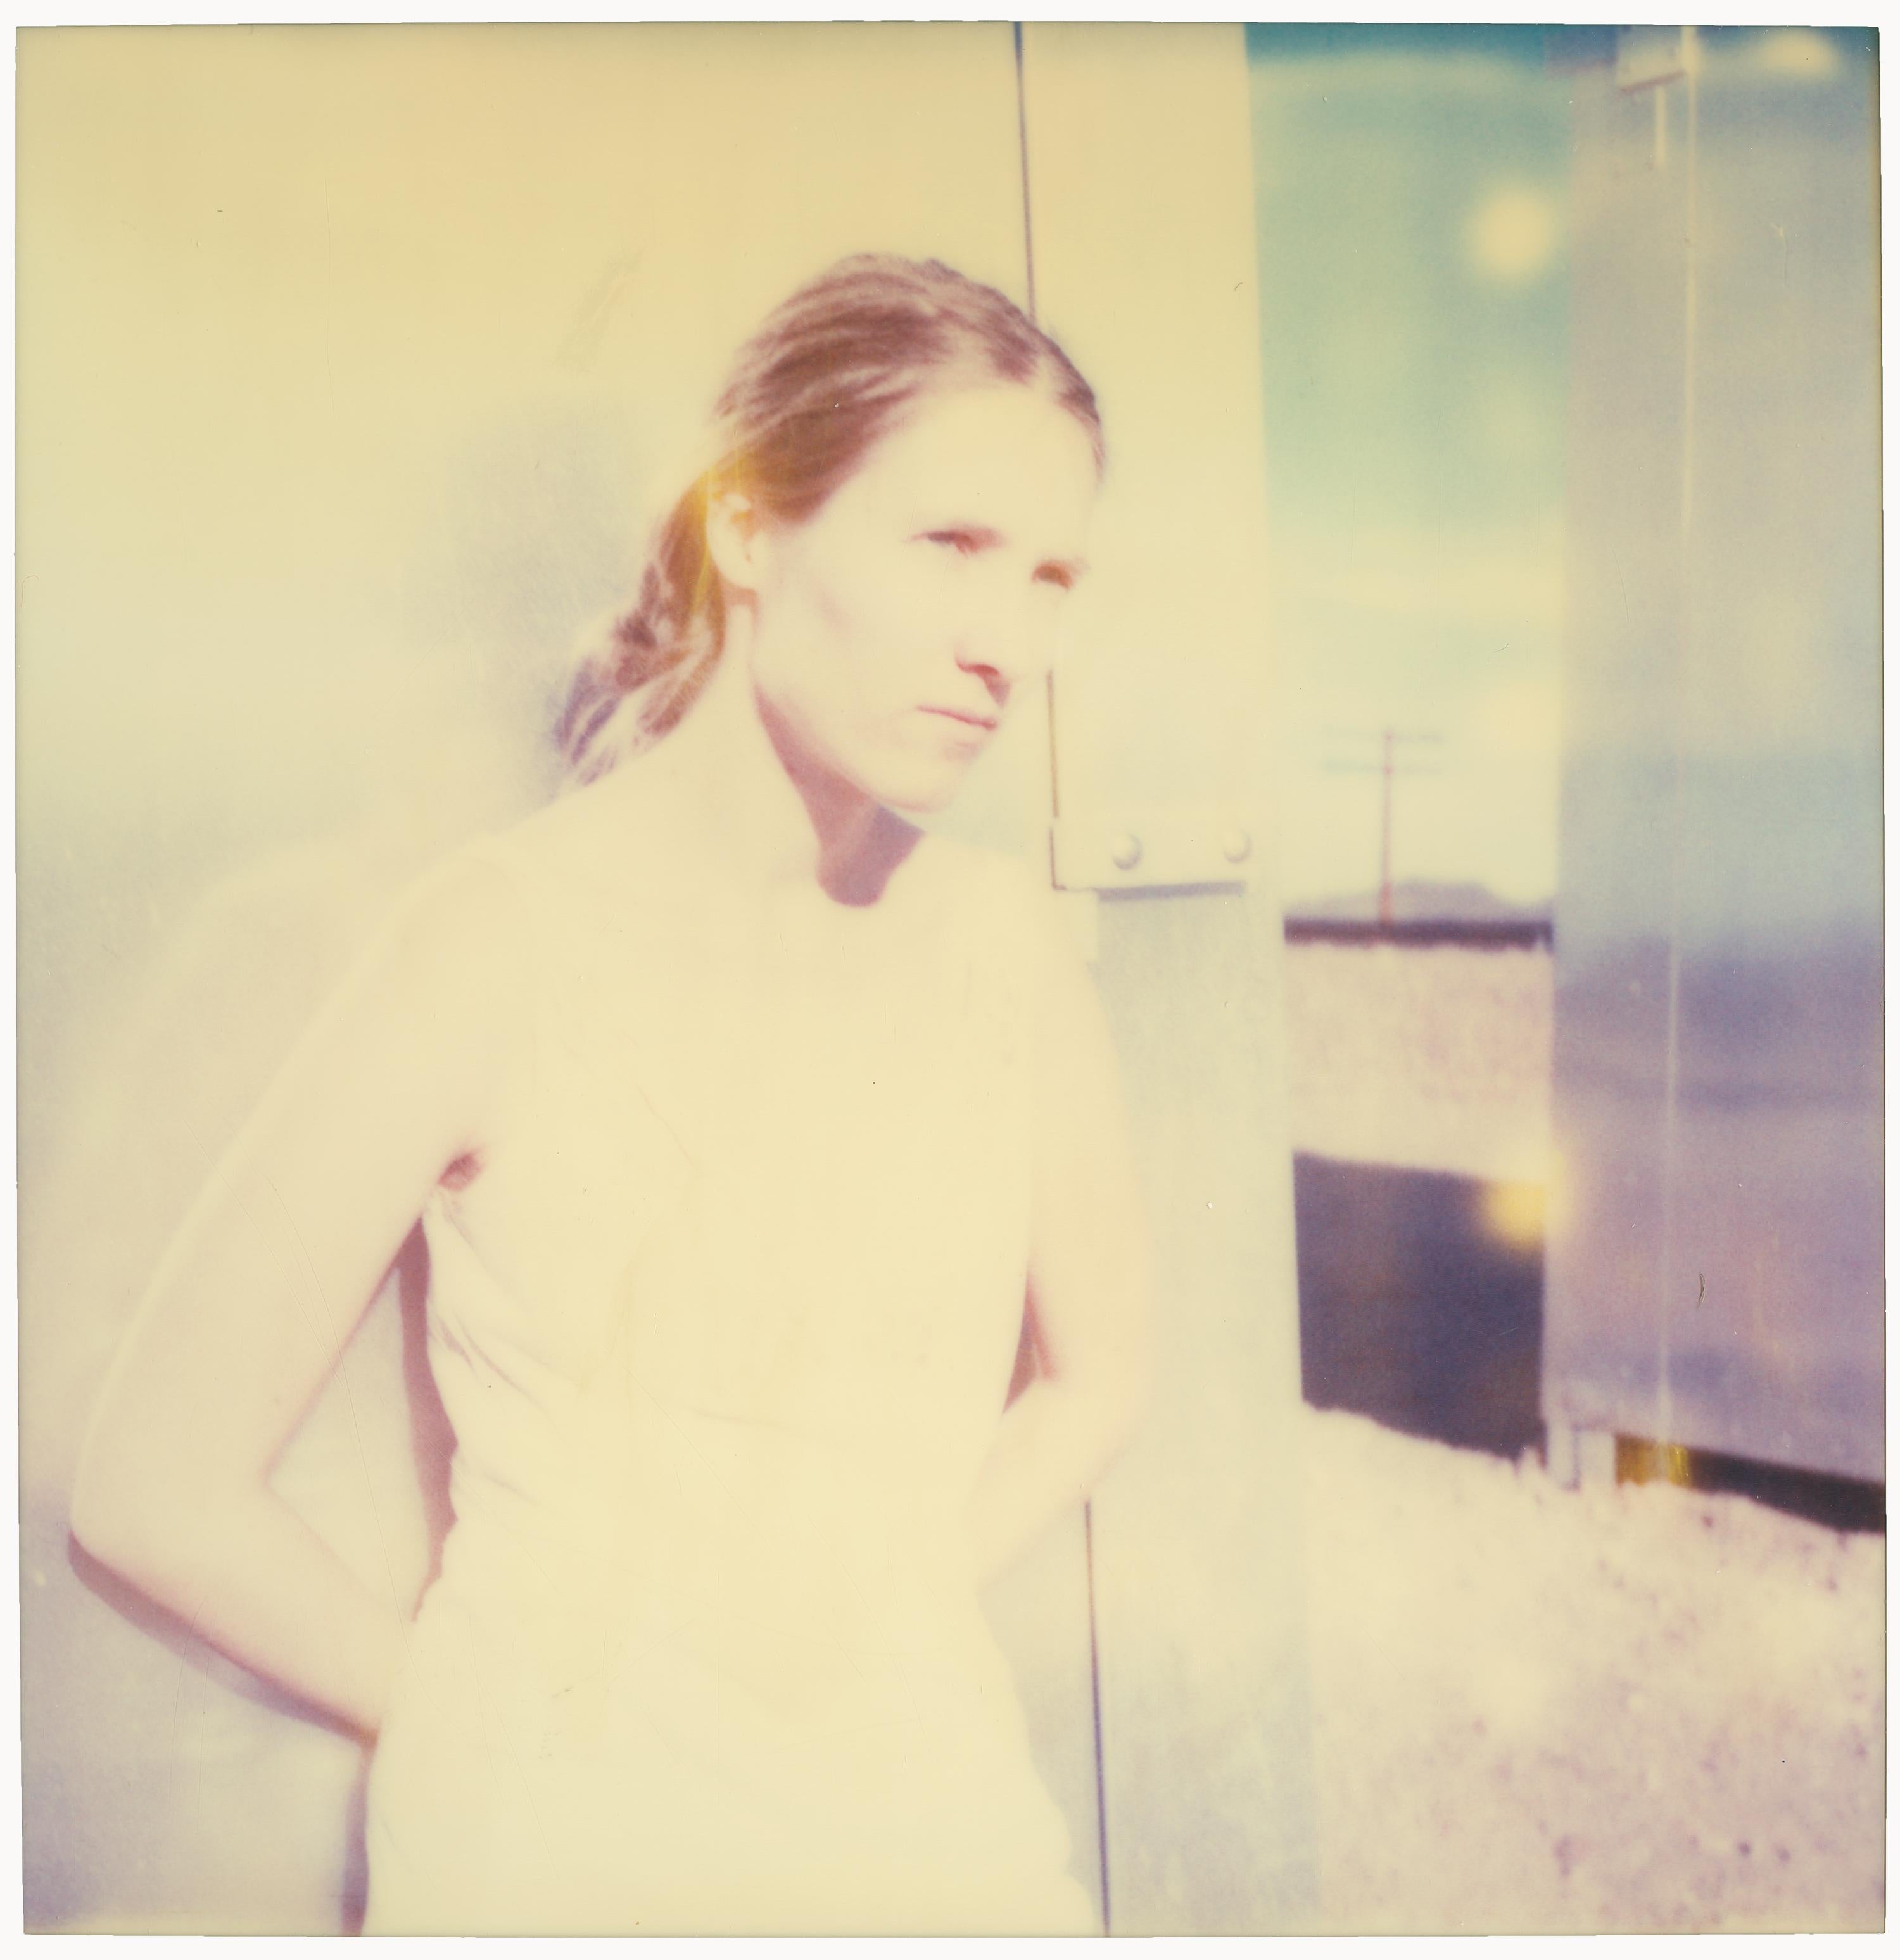 Stefanie Schneider Portrait Photograph - Untitled (Traintracks) - based on a Polaroid